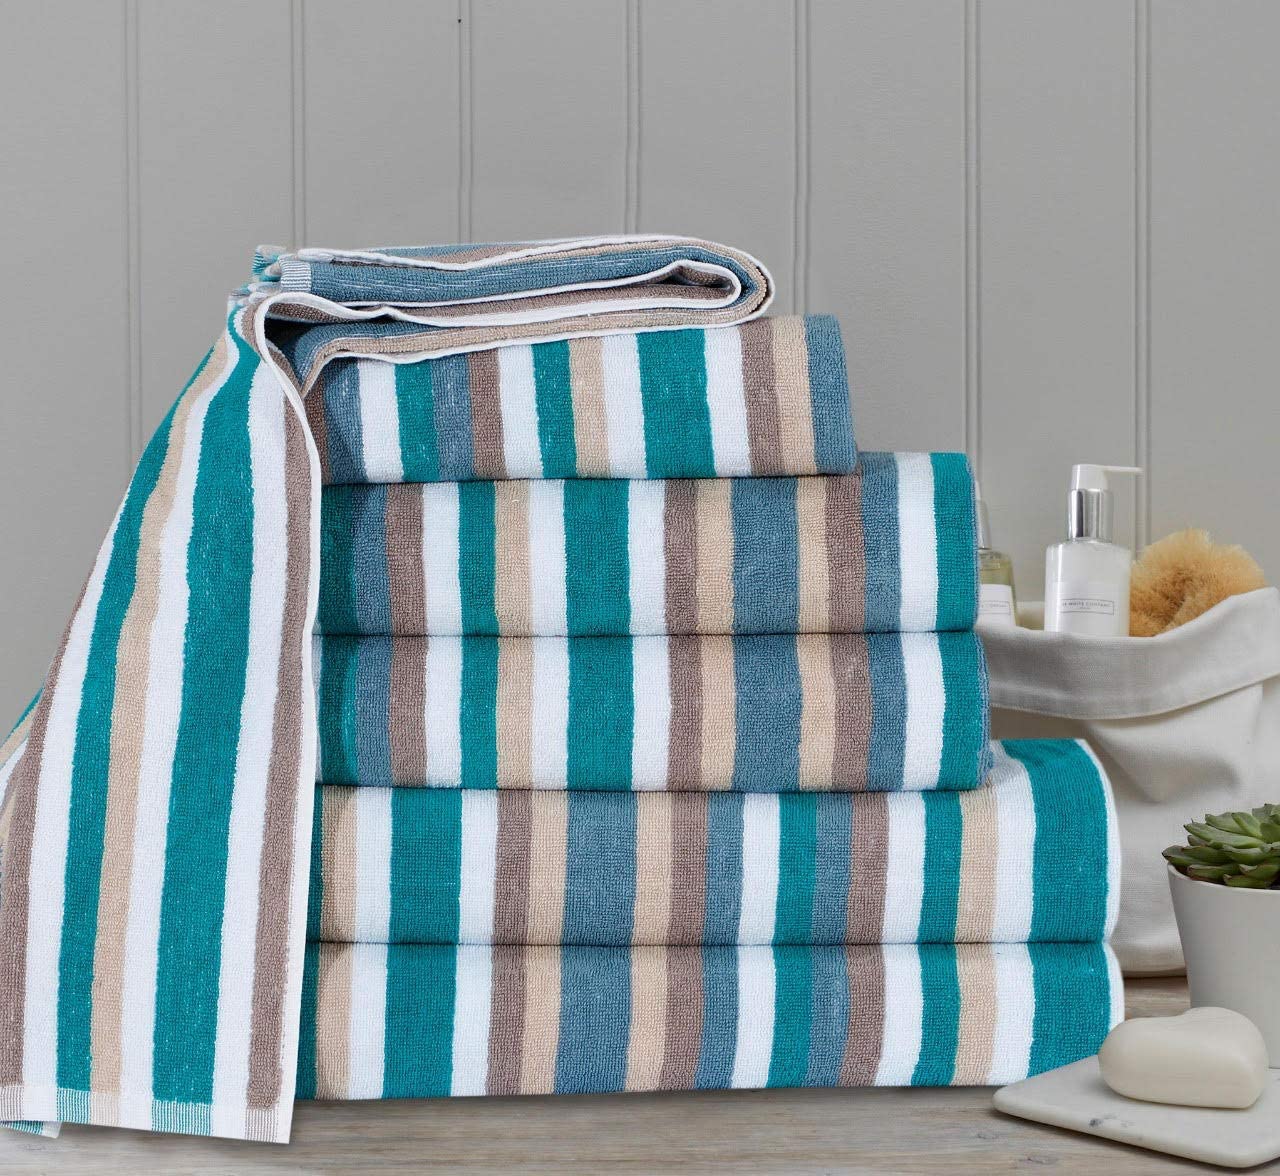 Royal Victorian Stripe Towel 100% Flossy Cotton Stripe Design Excellent Quality